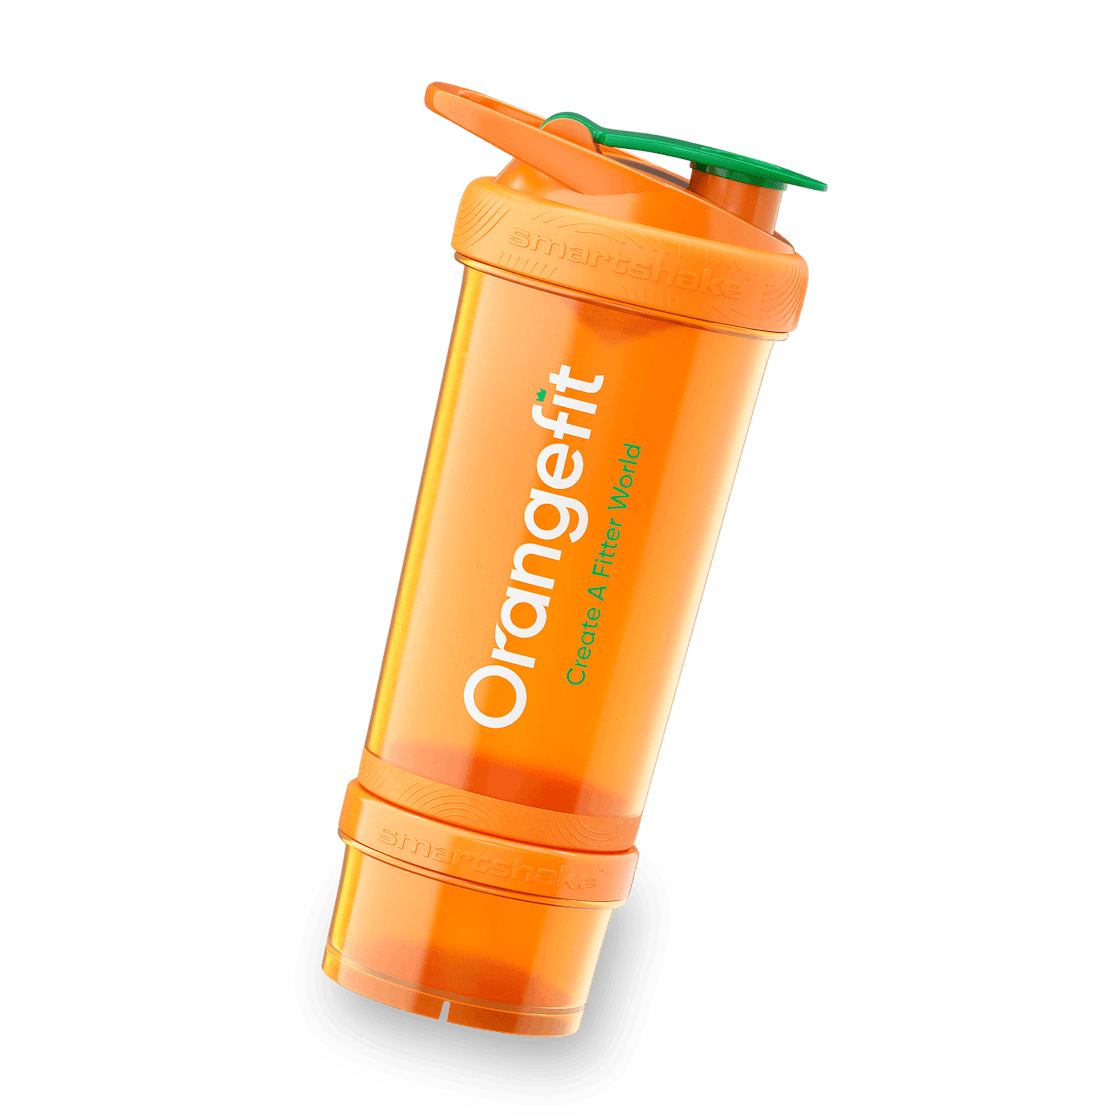 mout verschijnen Straat Fit Shaker kopen? - BPA en lekvrij - Trustscore 9,6